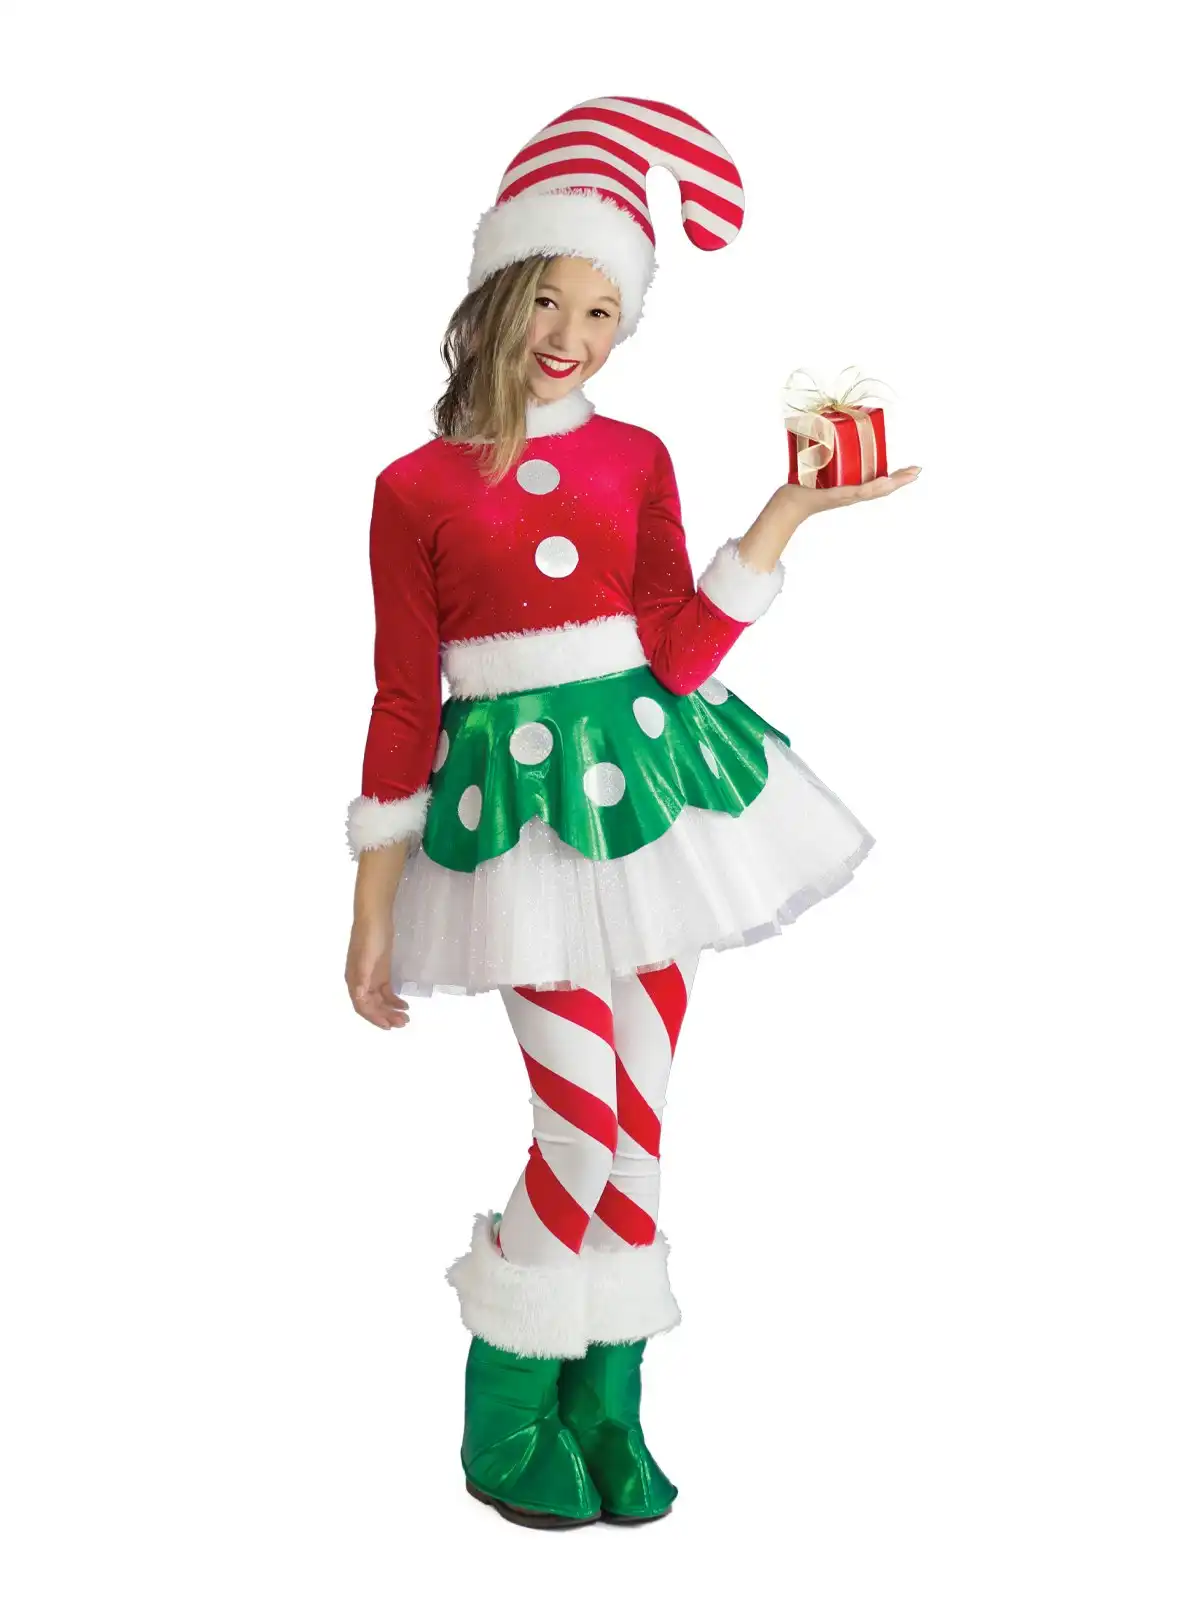 Princess Paradise Candy Cane Elf Princess Dress Up Christmas Costume Size M